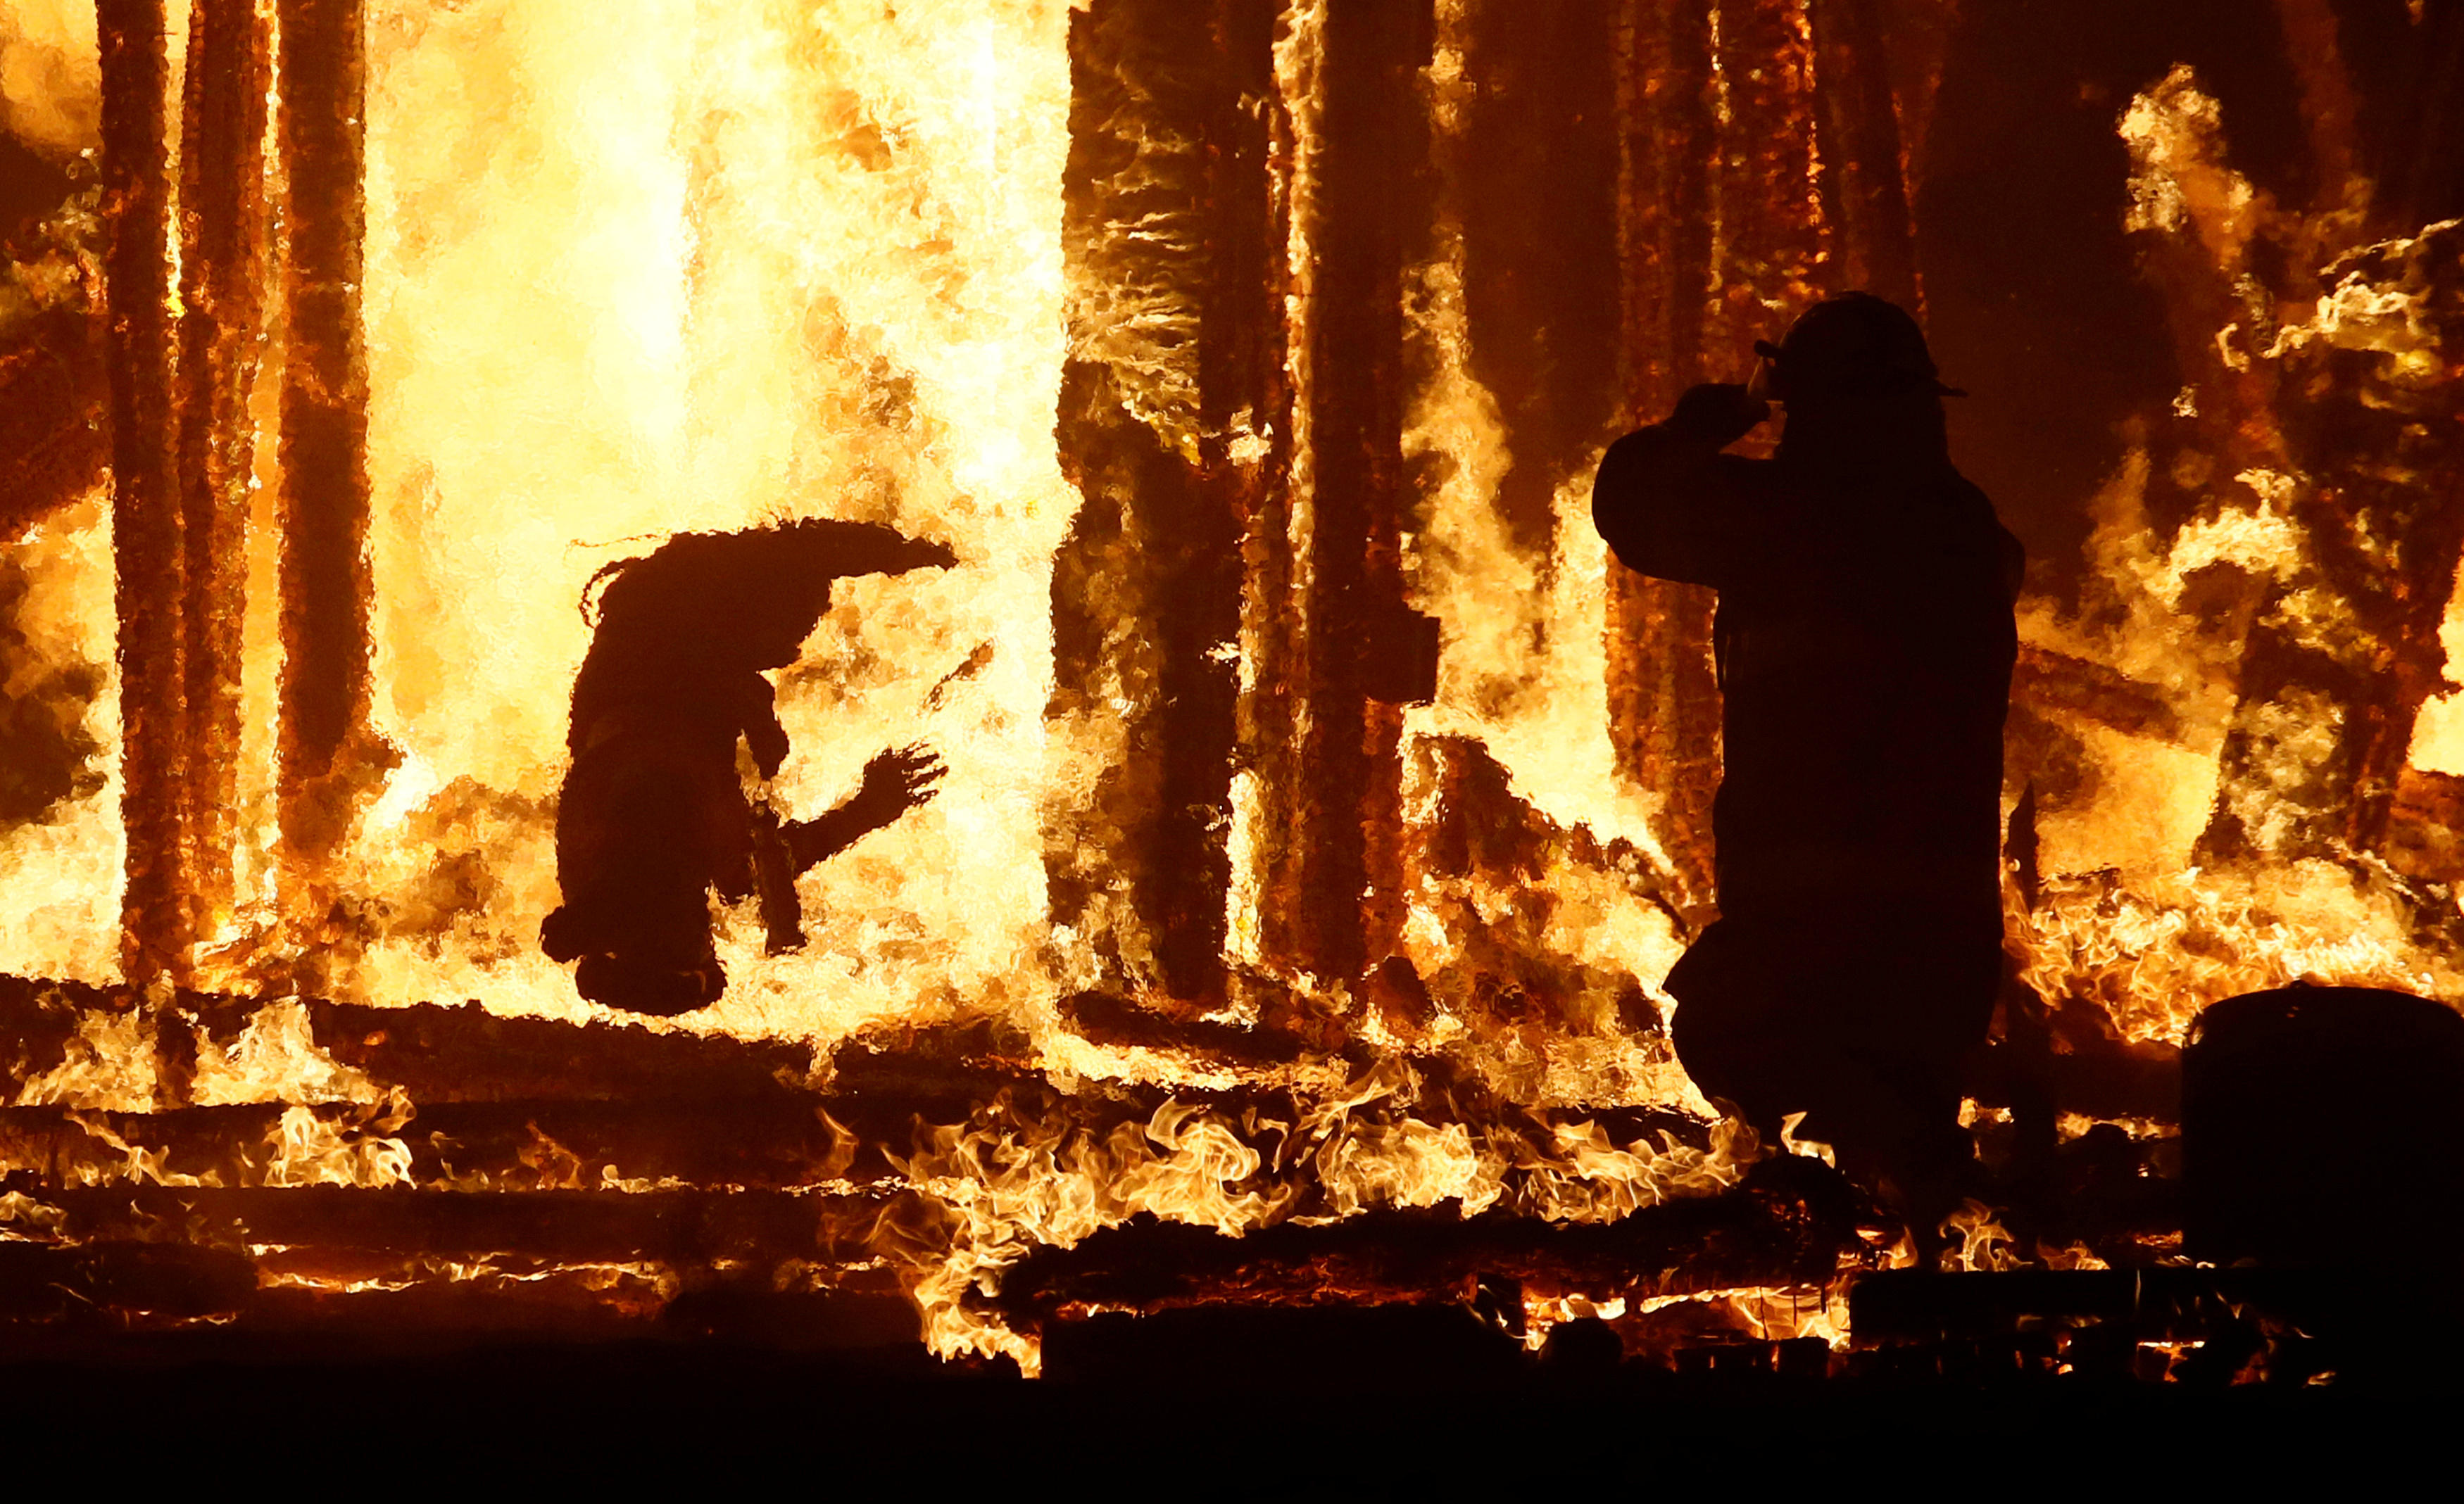 Burning Man festival: Man dies after running into flames - CBS News